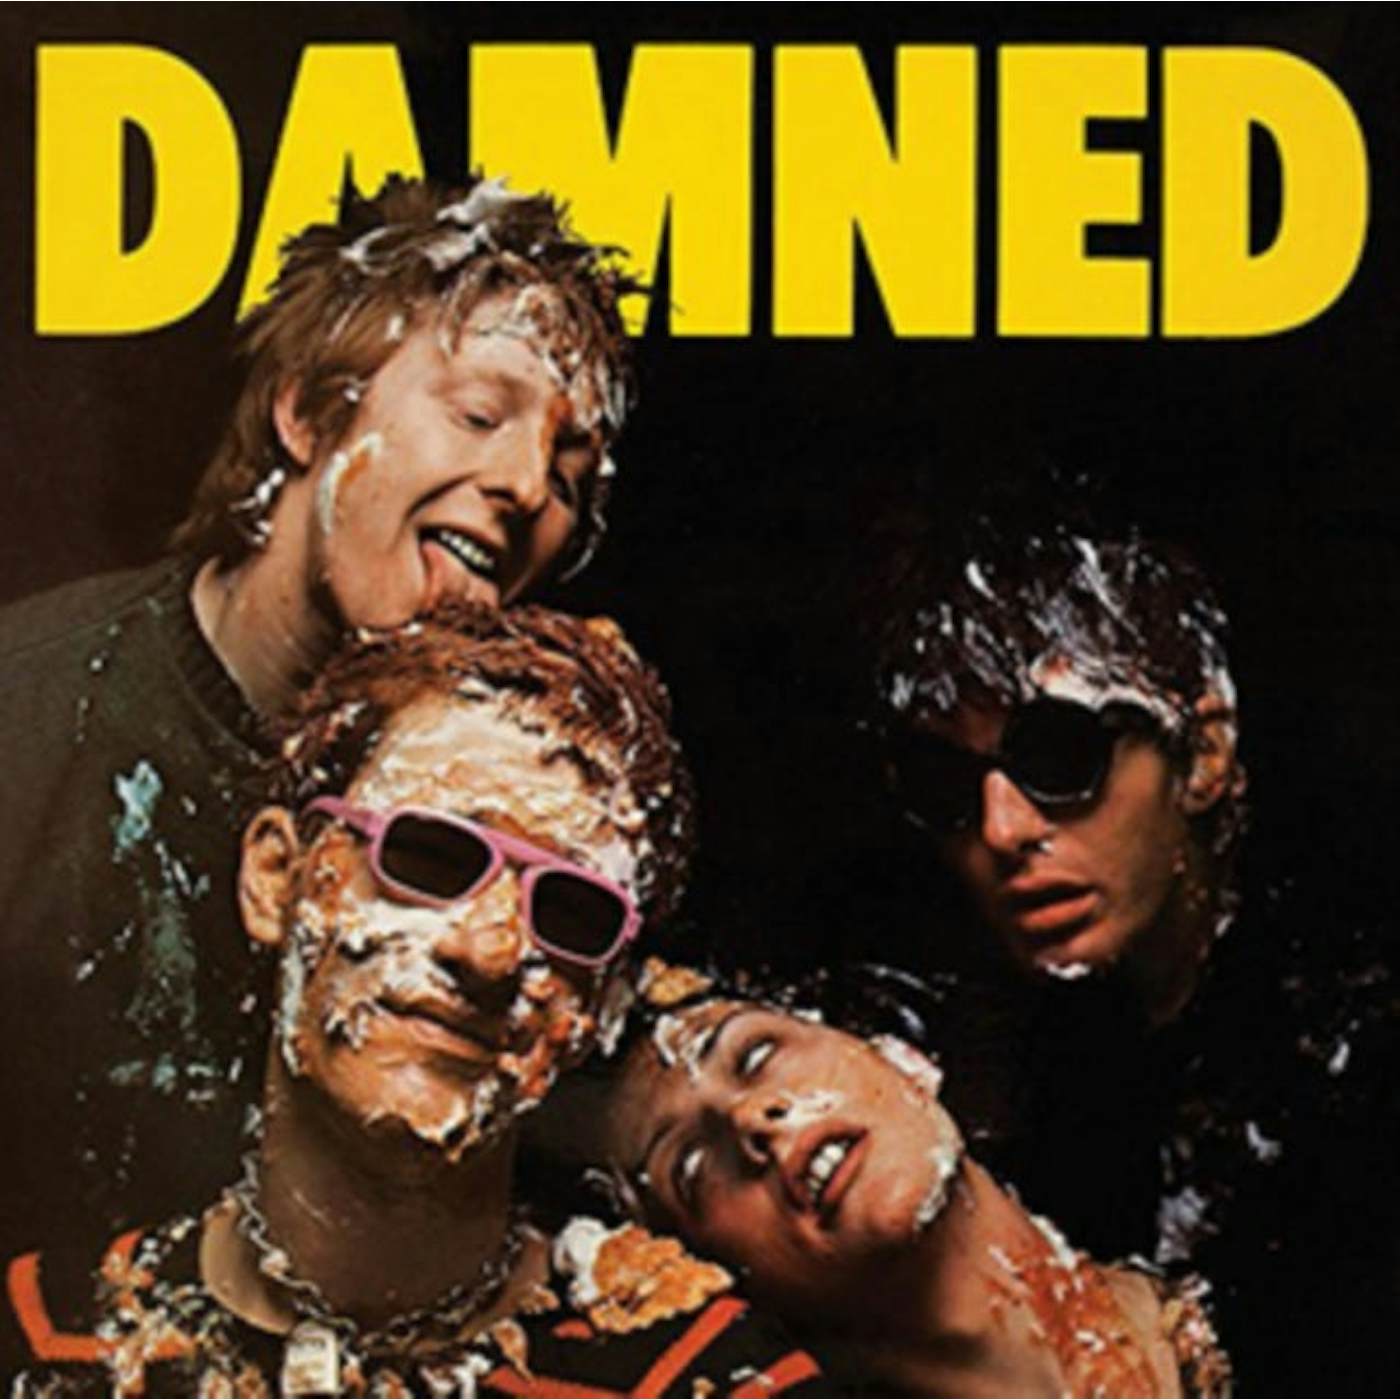 The Damned LP Vinyl Record - Damned Damned Damned (20. 17  - Remaster)